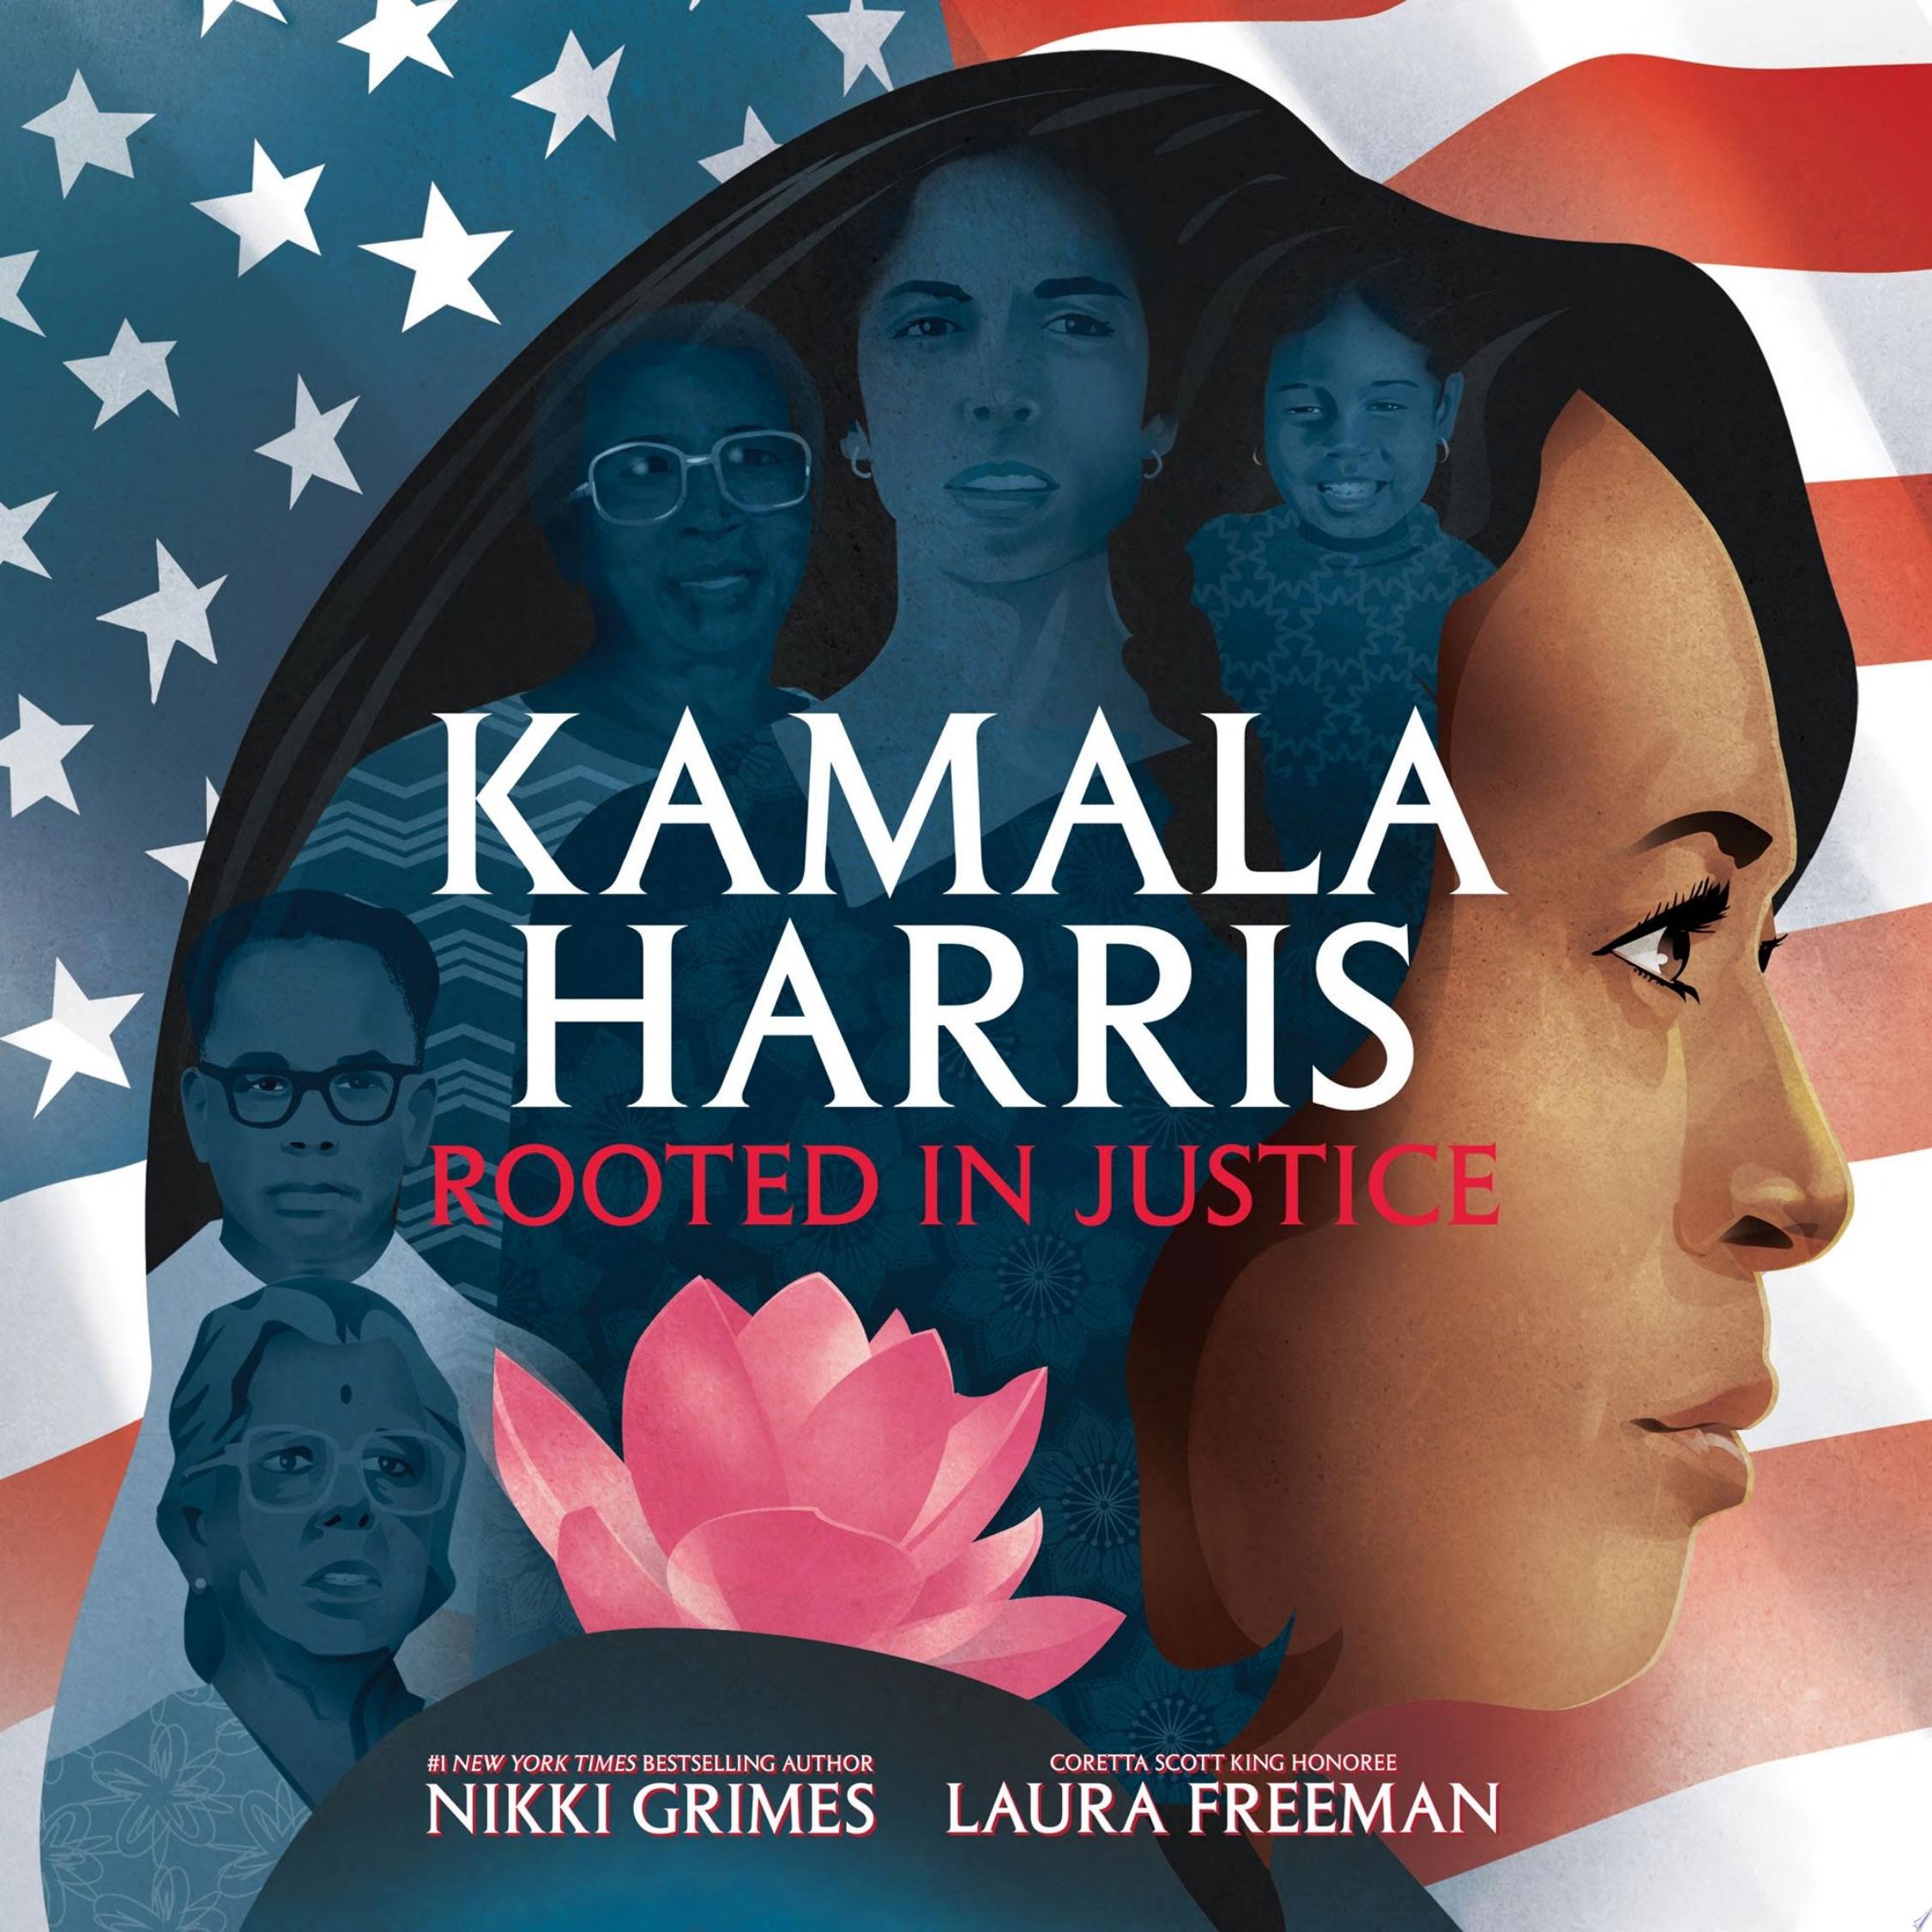 Image for "Kamala Harris"